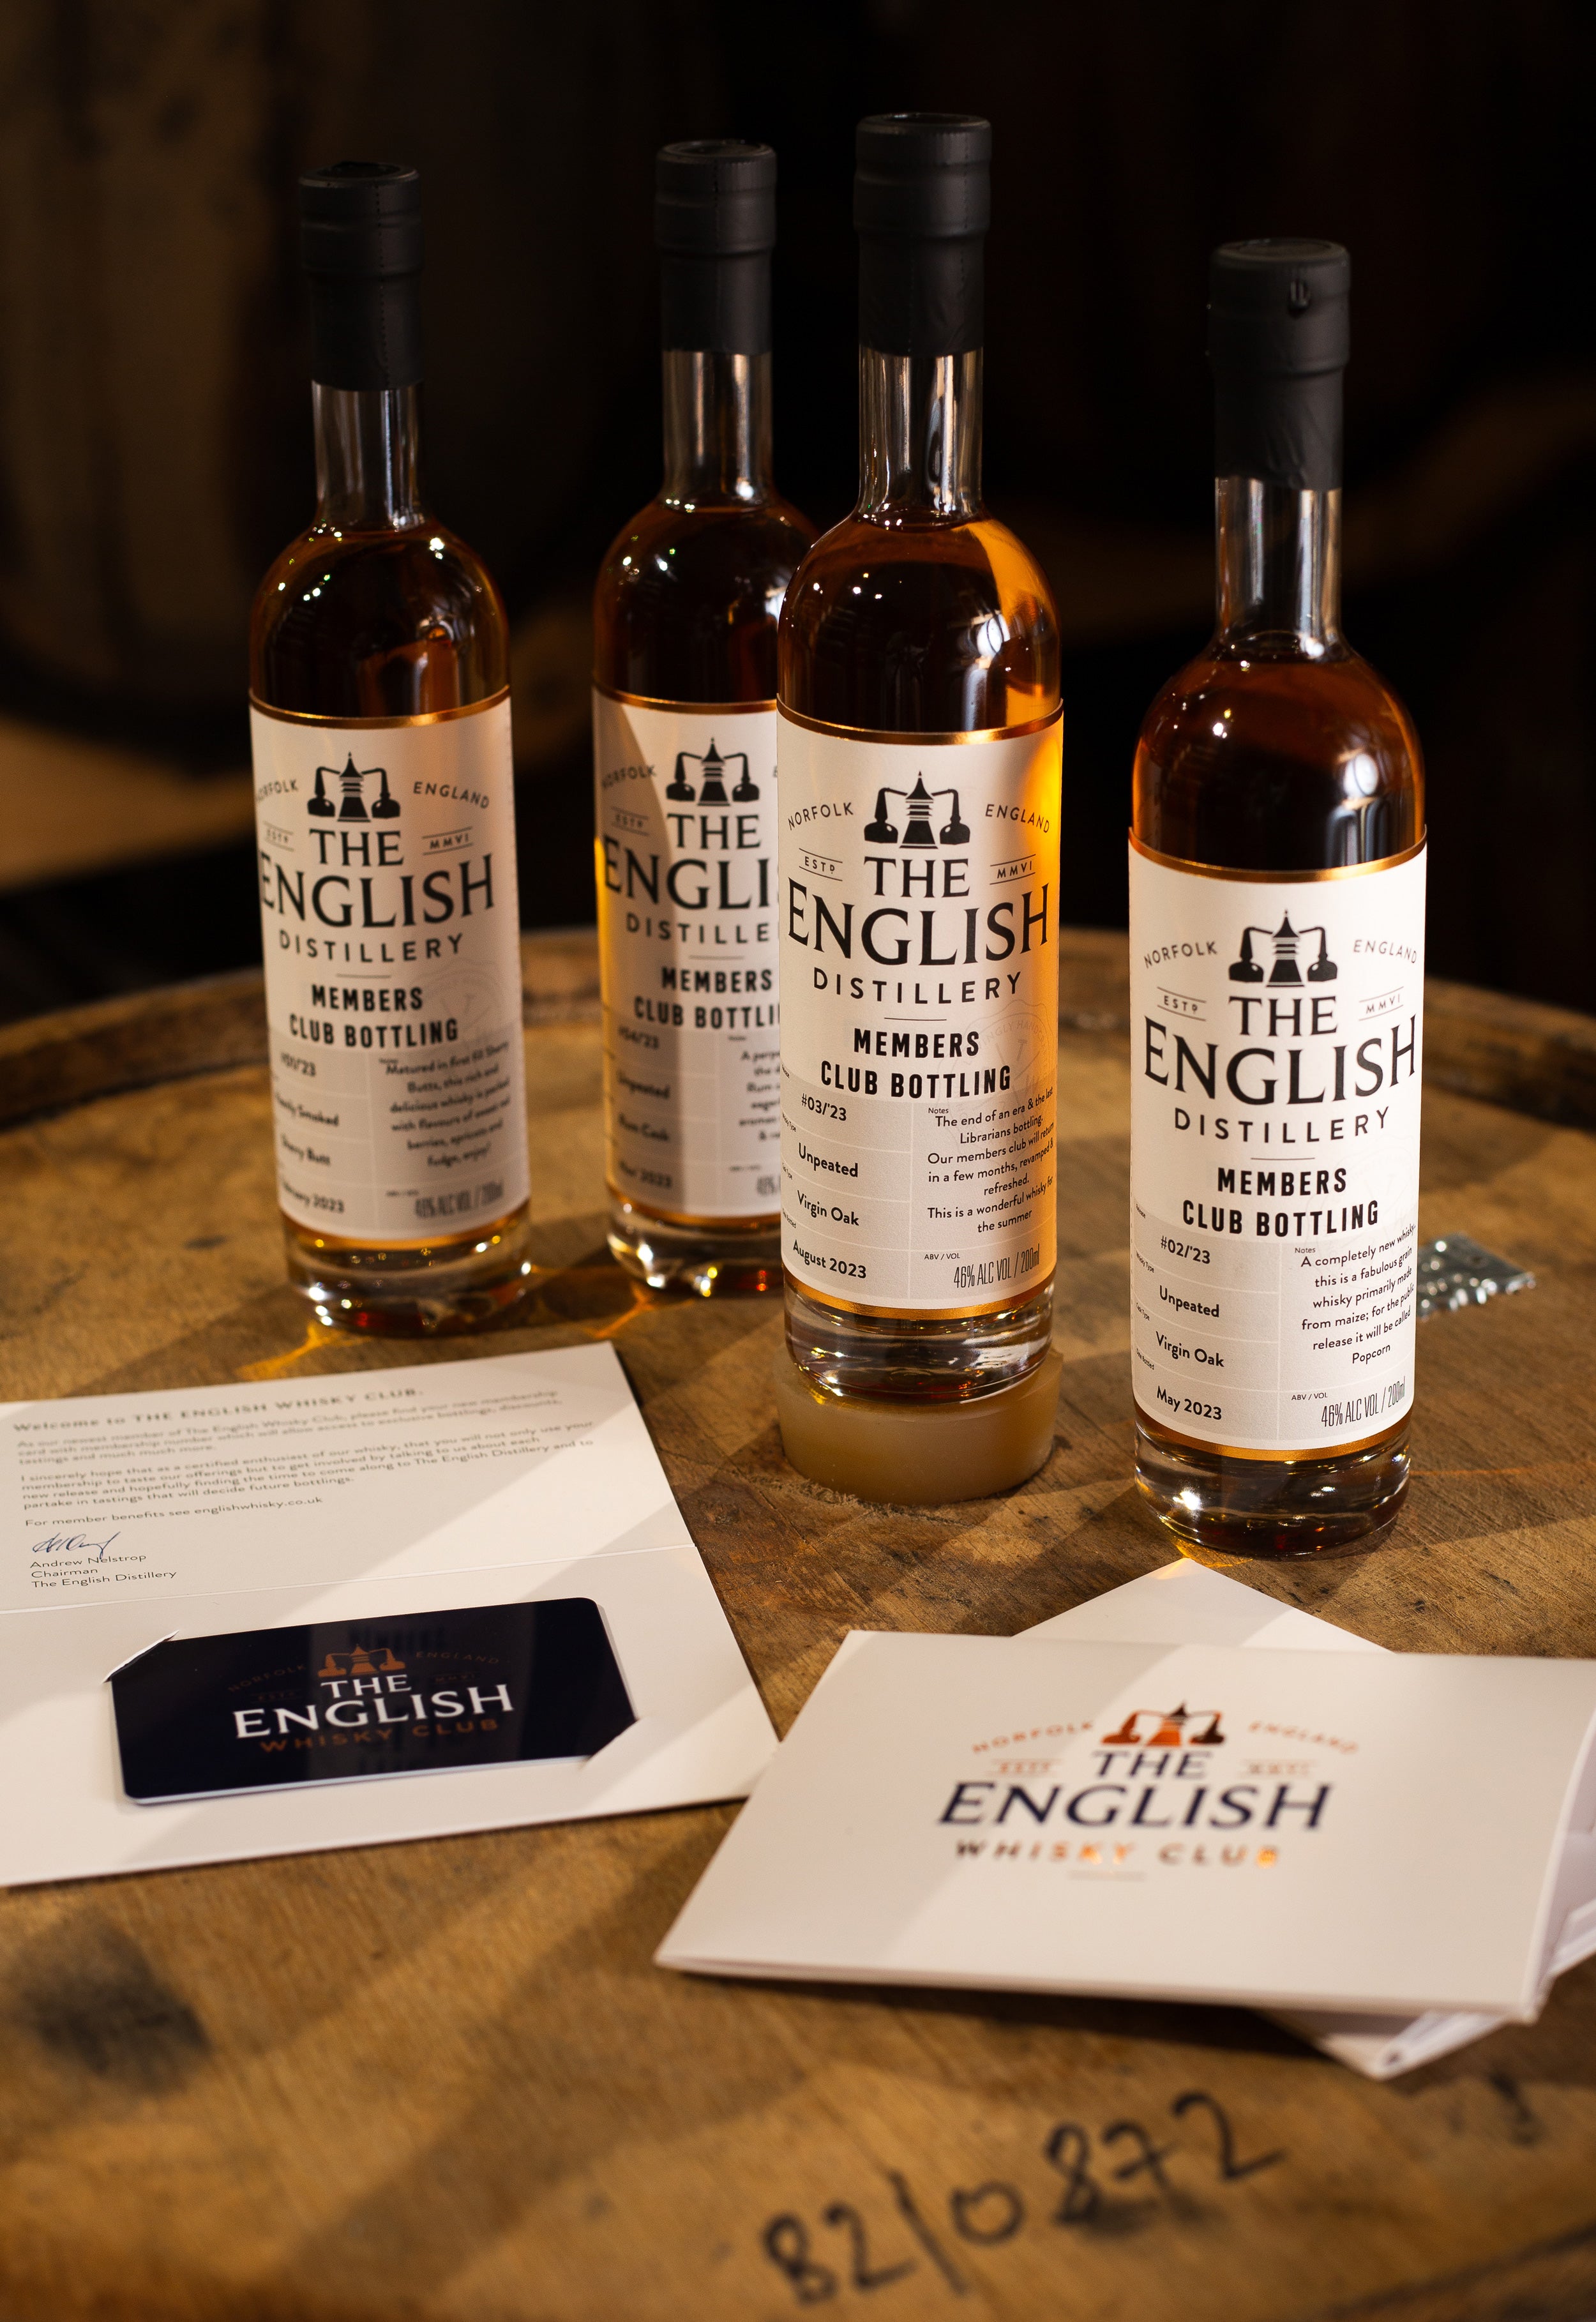 The English Whisky Club